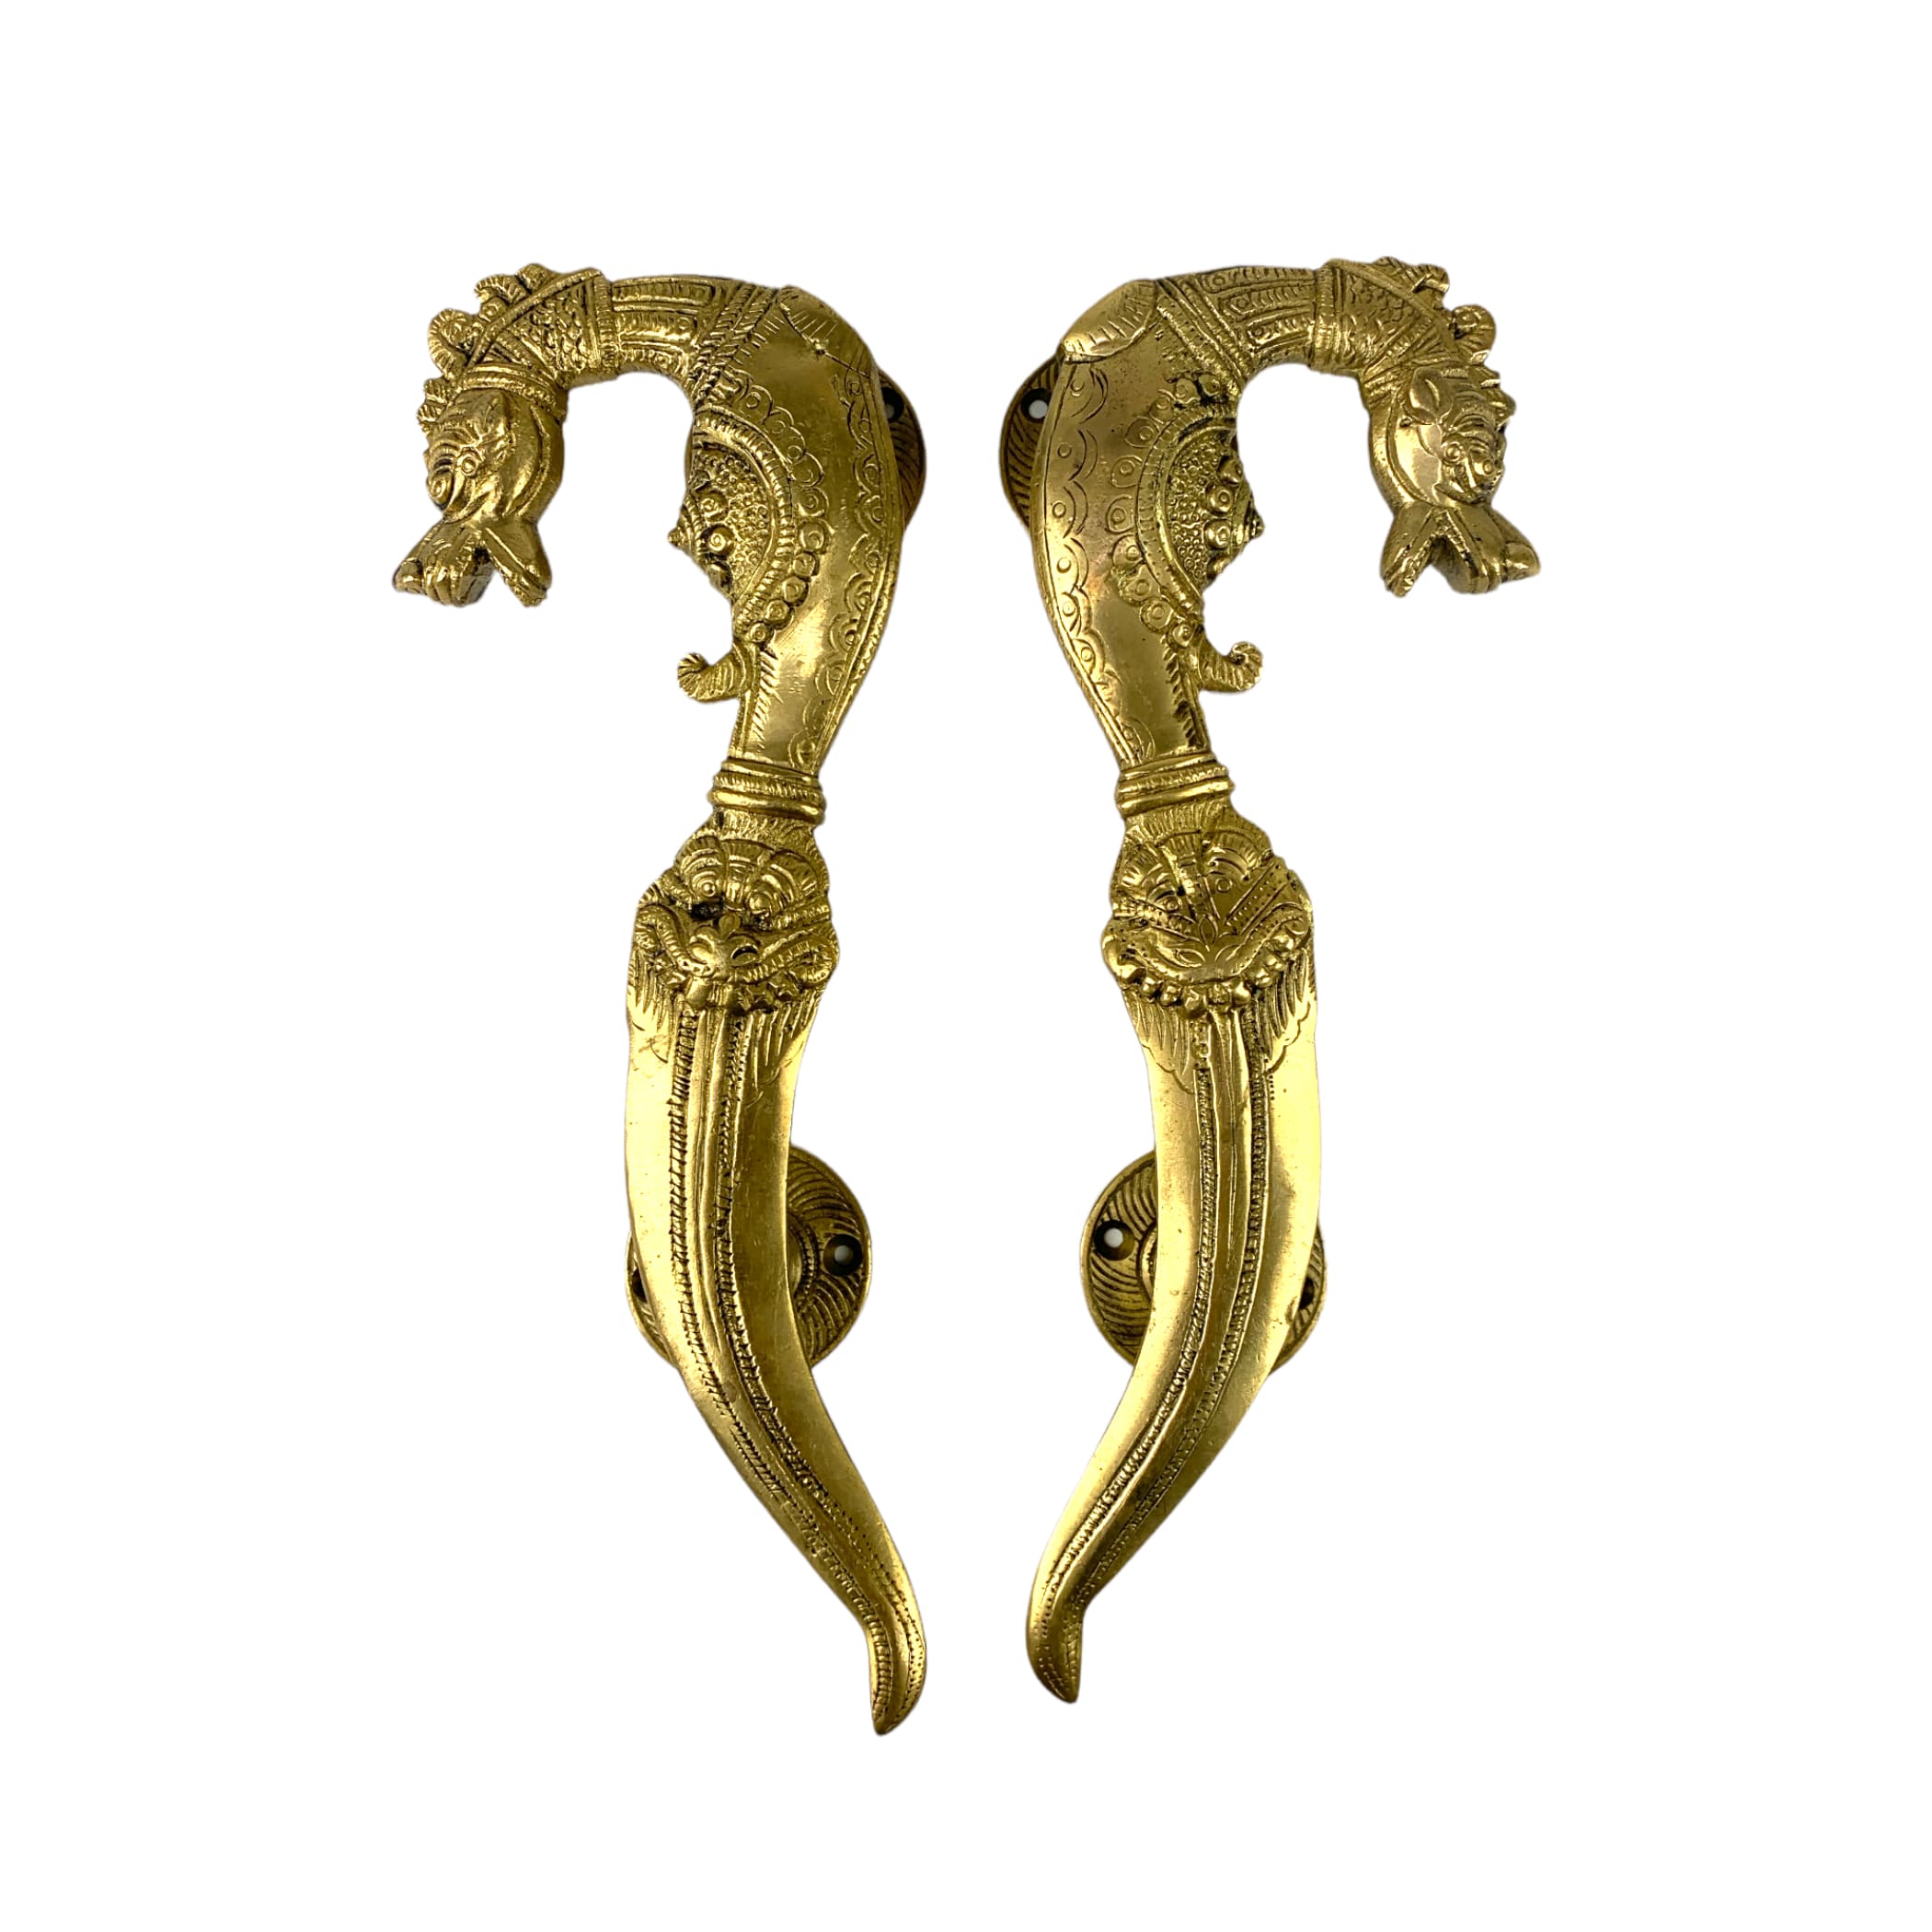 Dragon design door pull handles antique unique brass knobs